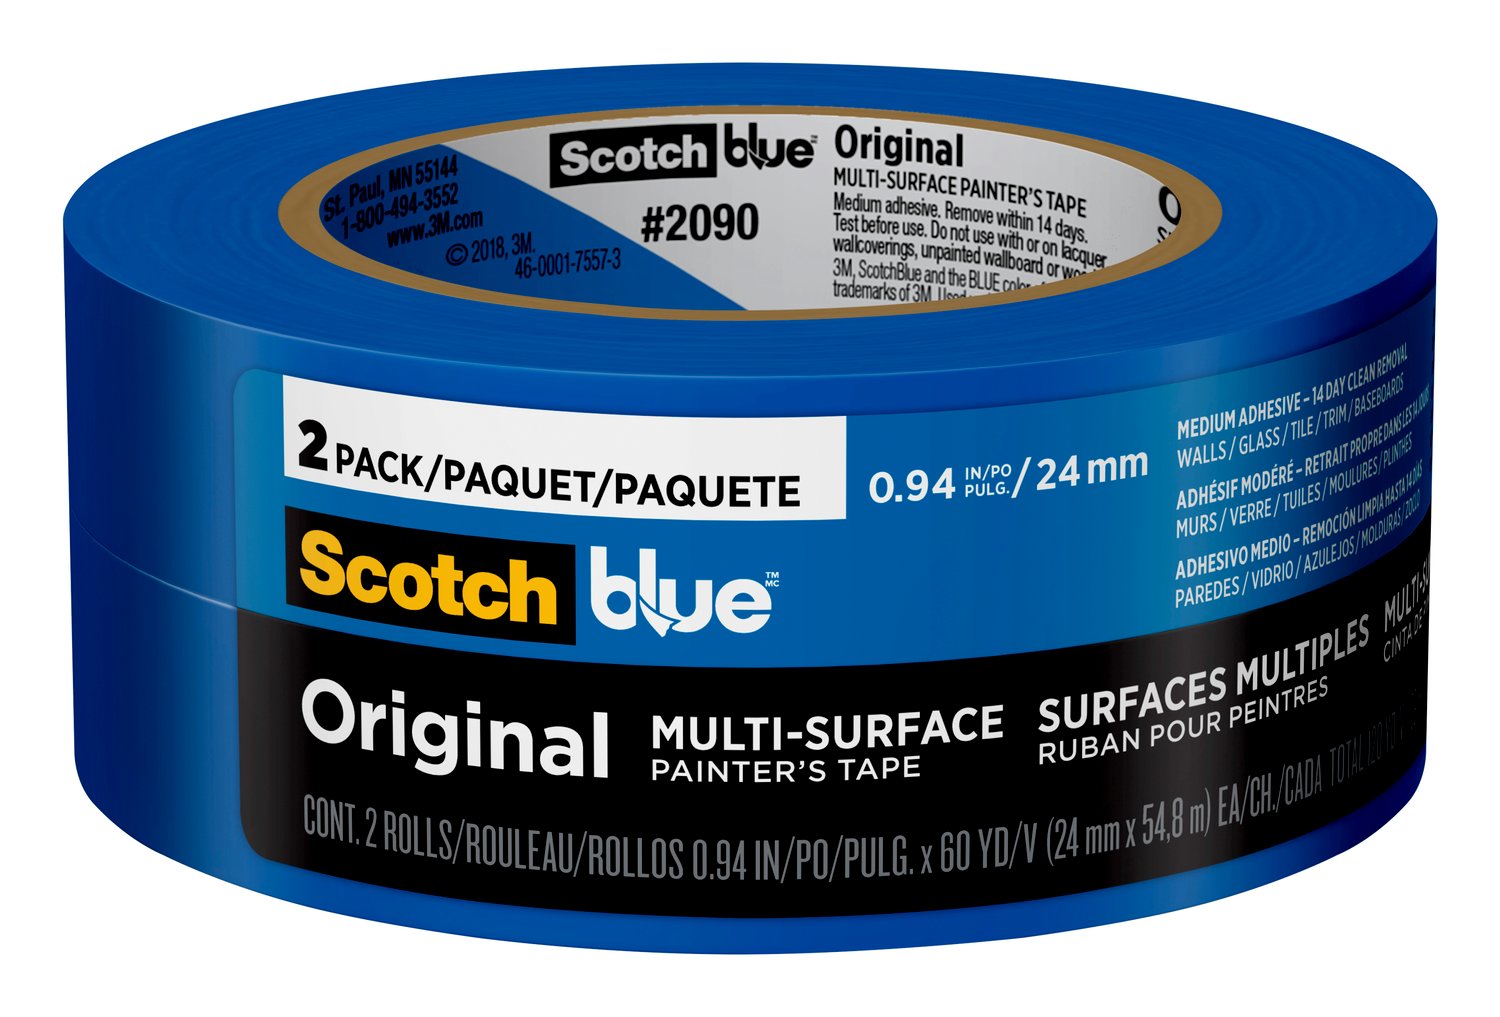 7100185553 - ScotchBlue Original Painter's Tape 2090-24CC2, 0.94 in x 60 yd (24mm x
54,8m), 2rolls /pack